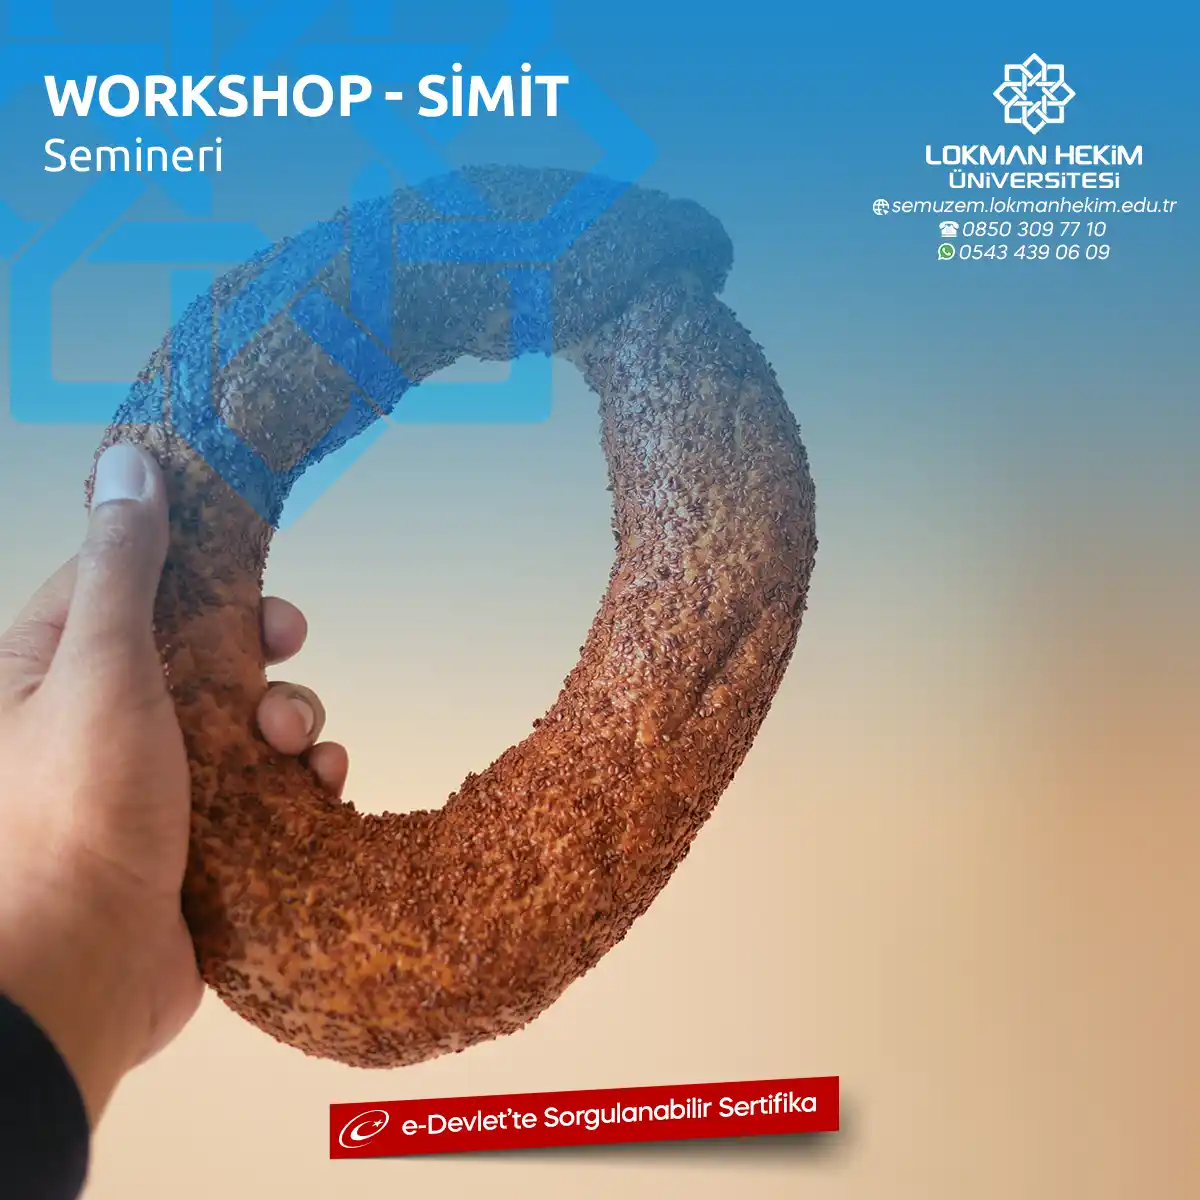 Workshop - Simit Semineri